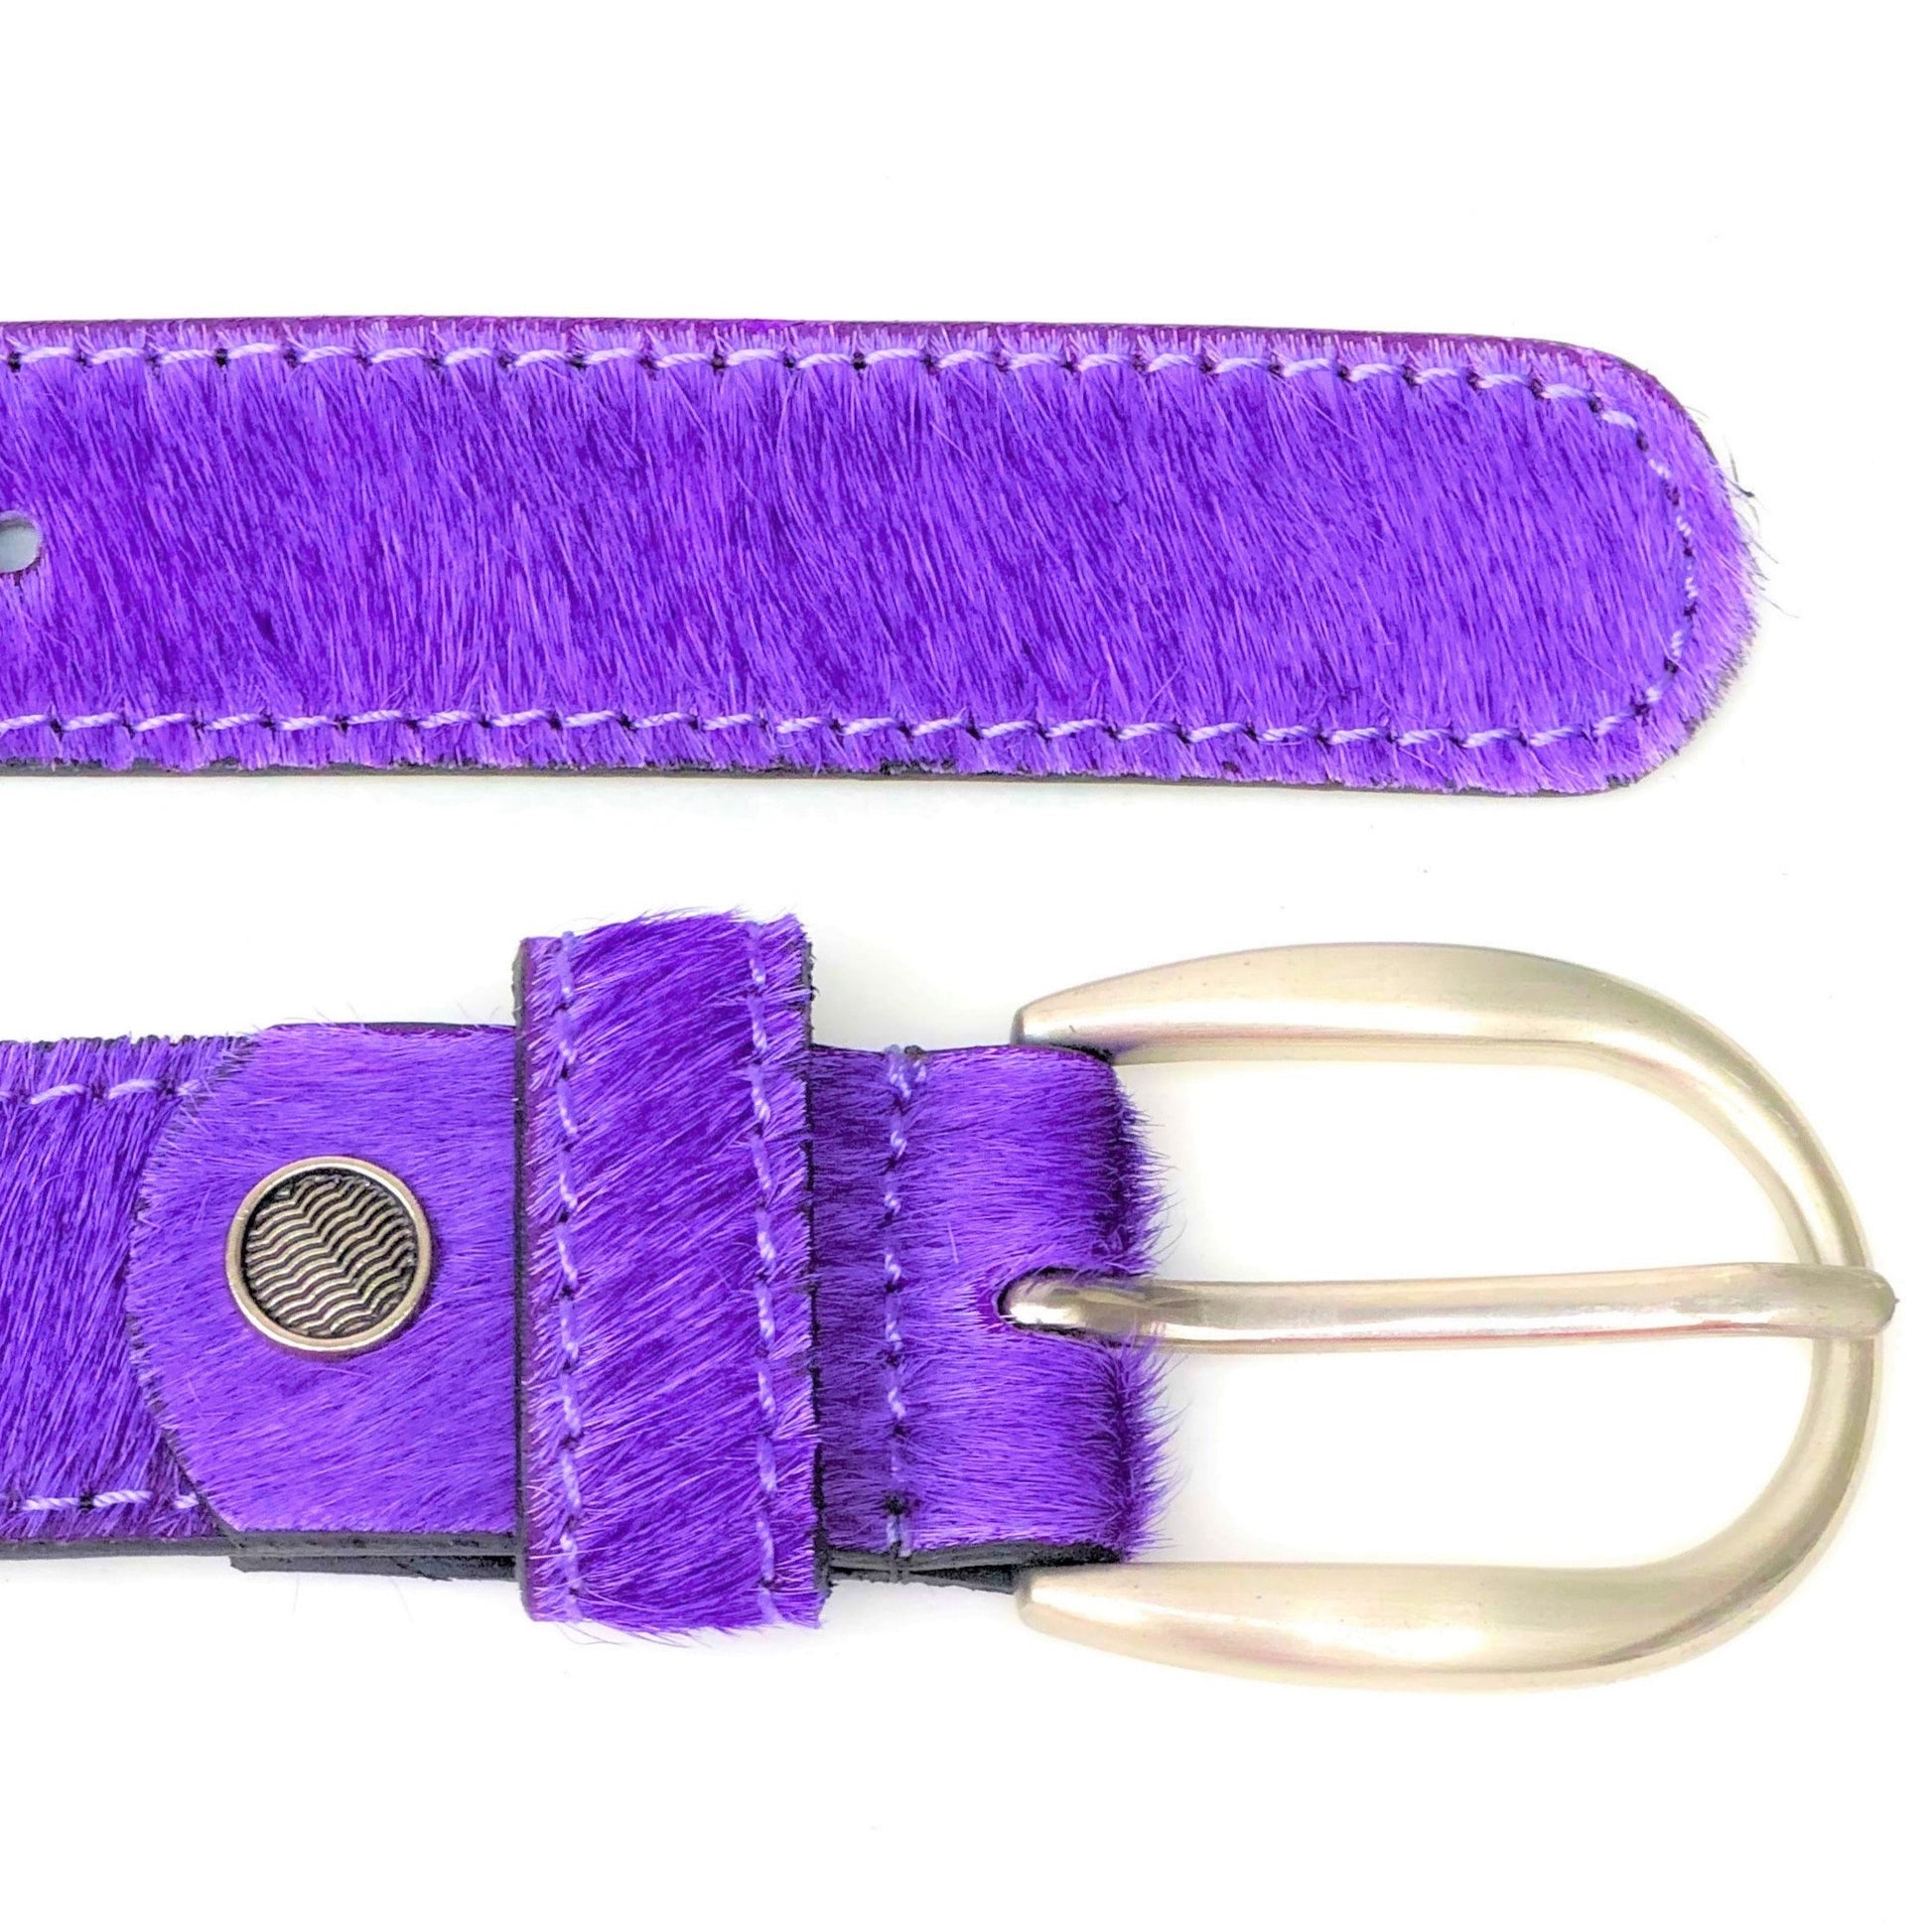 Light Purple hair-on-hide women leather belt with metal buckle